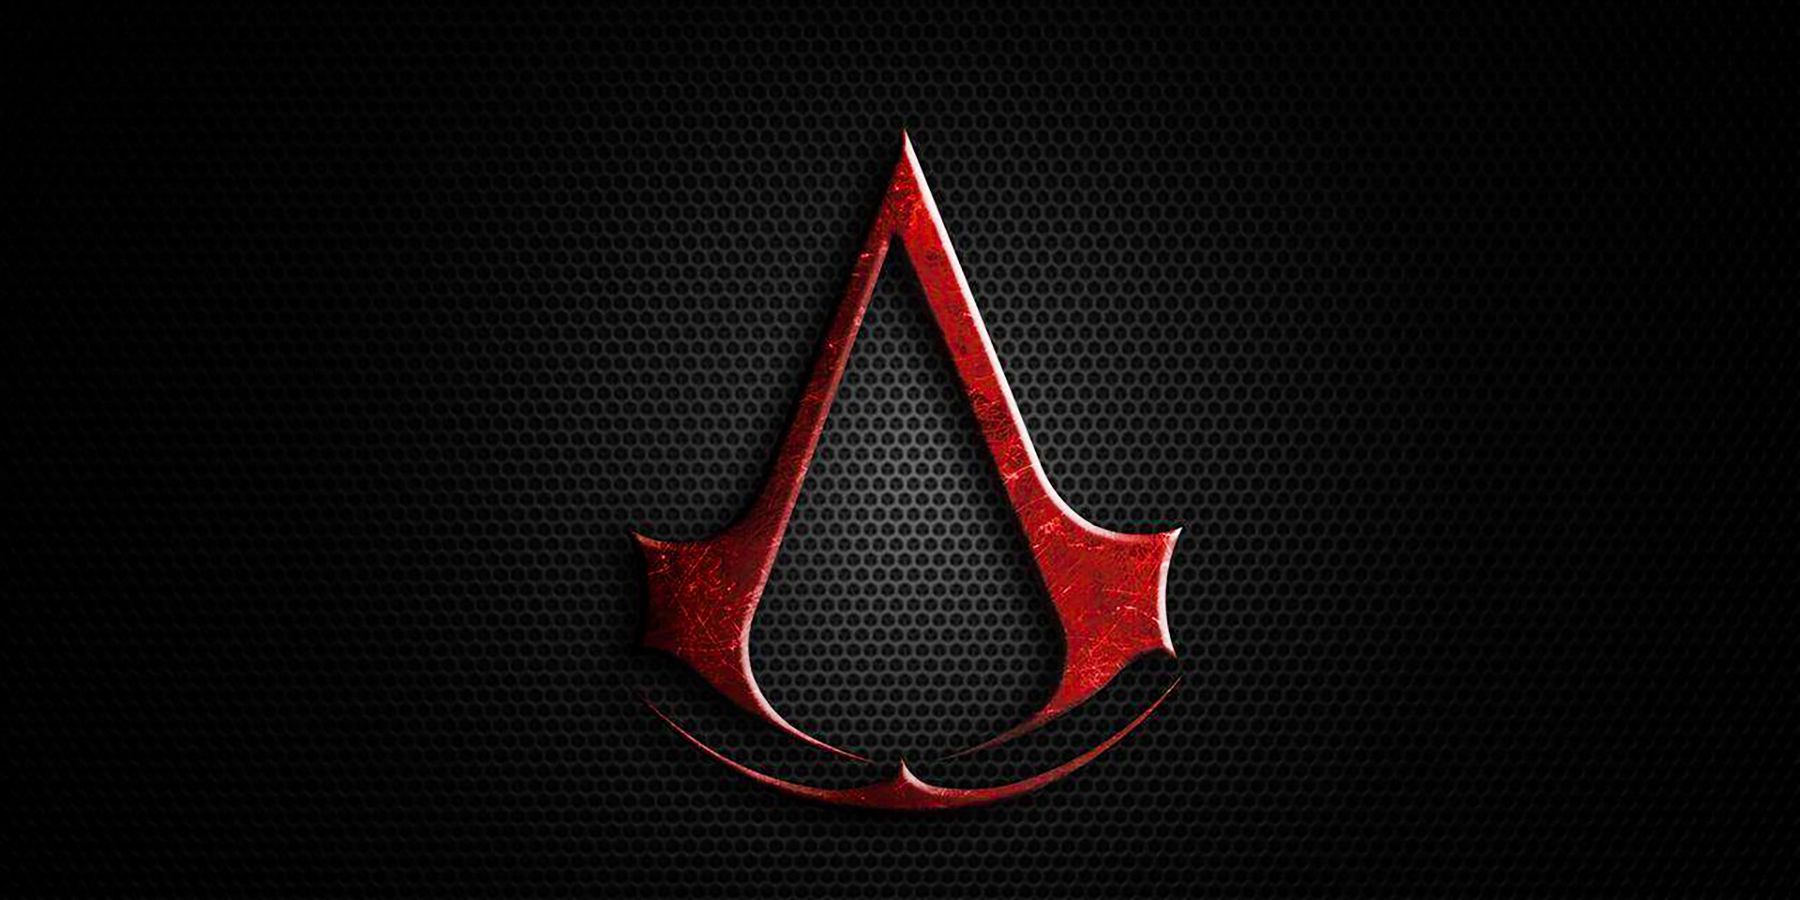 New Assassin’s Creed Game Setting potentiellt läckt